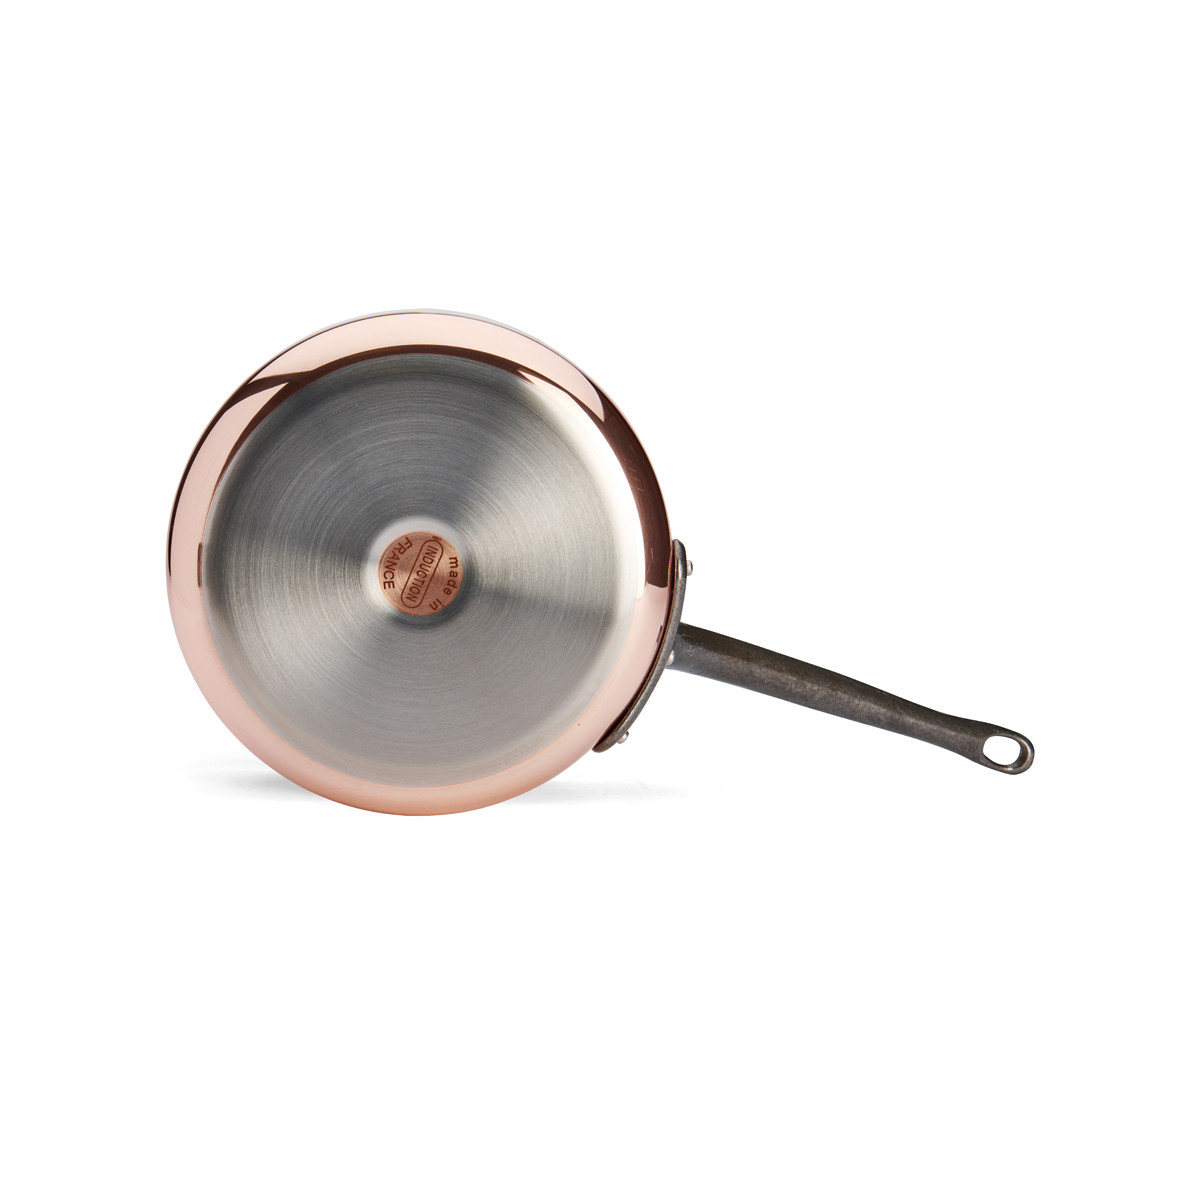 de Buyer Prima Matera Copper Stock Pot with Cast Iron Handles on Food52